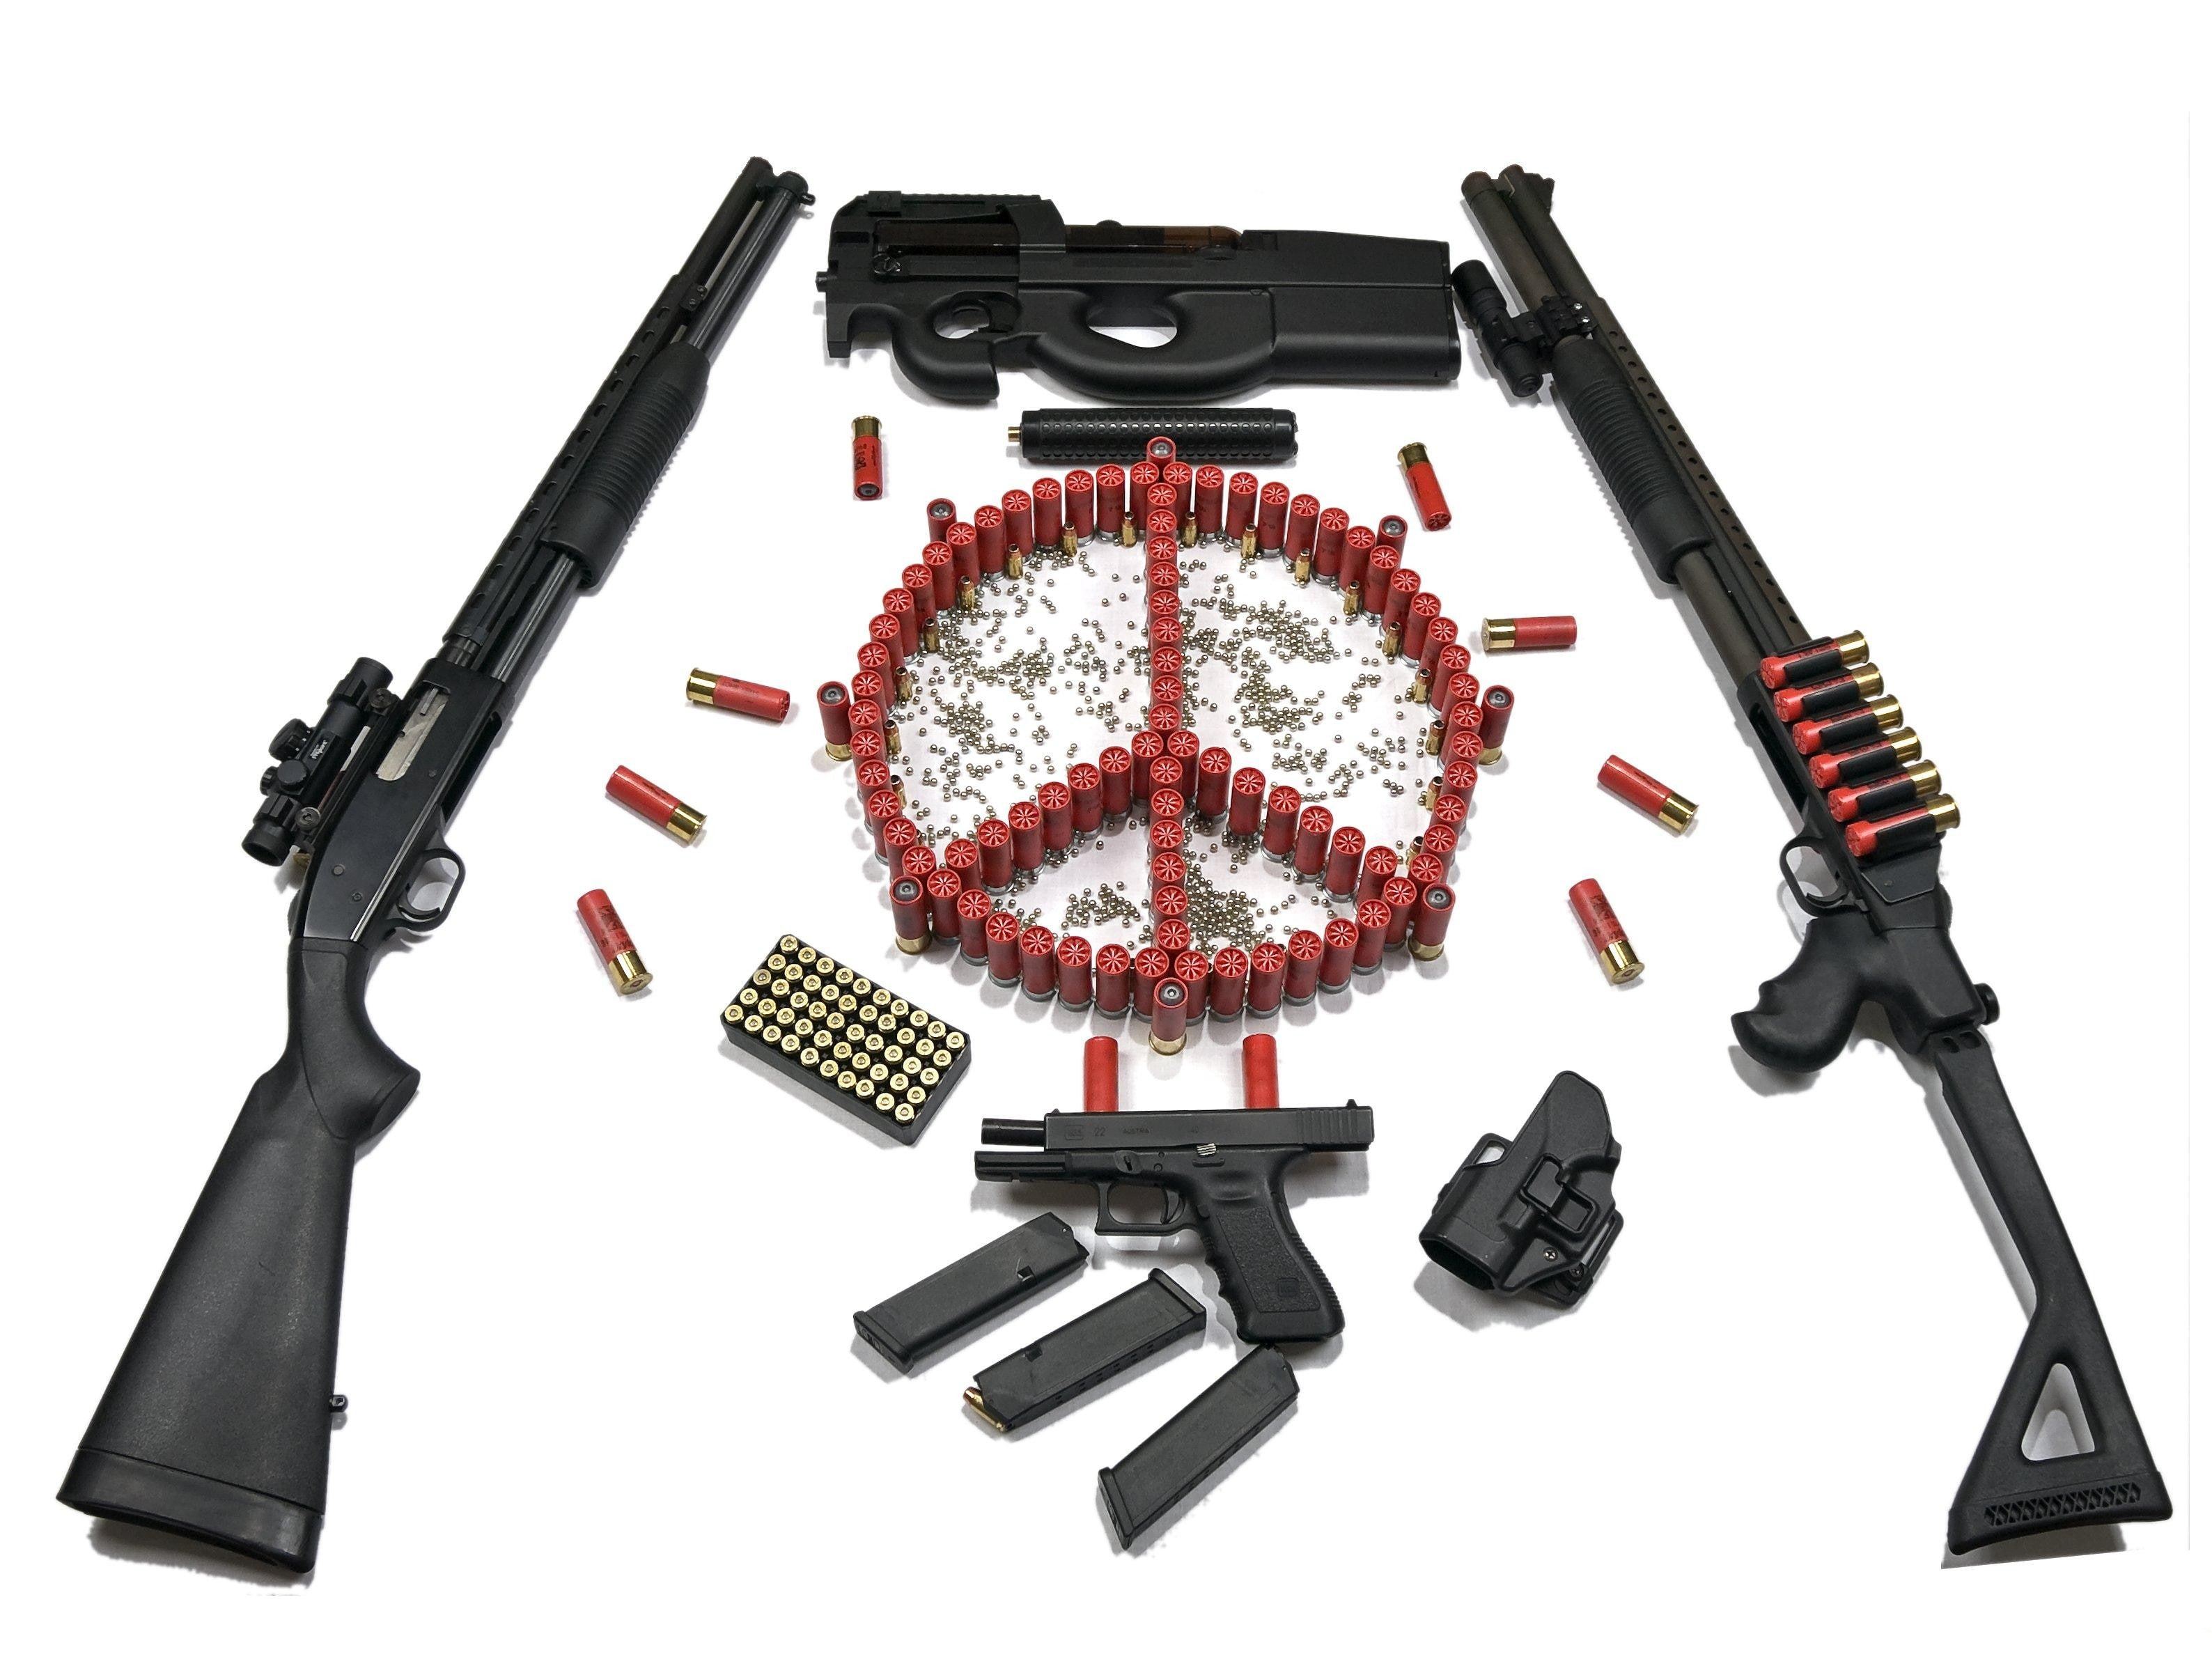 gun, FN P90, Mossberg 500, Glock, peace sign, ammunition, Glock 22